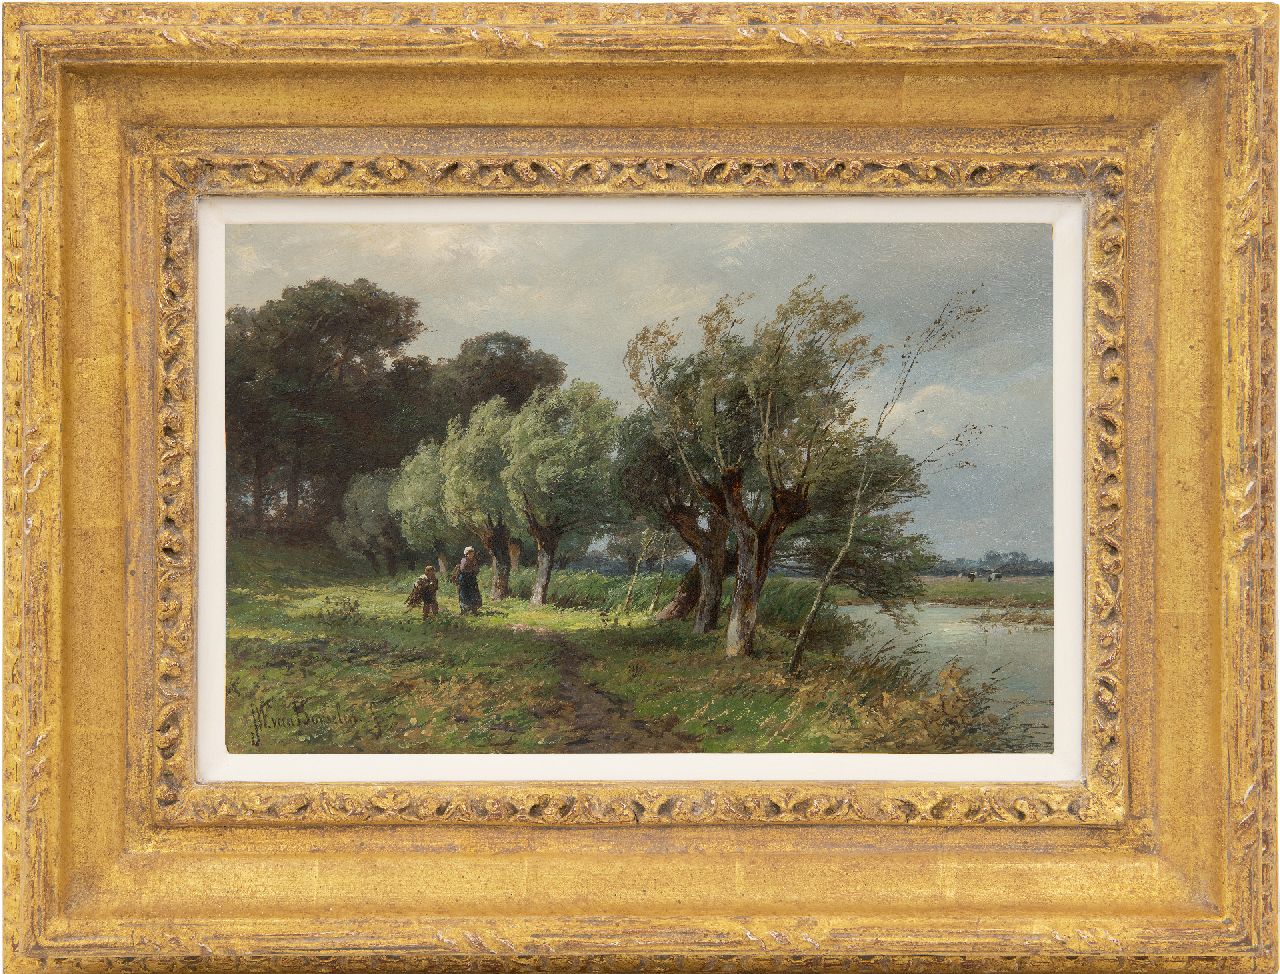 Borselen J.W. van | Jan Willem van Borselen, Gathering wood along the river, oil on panel 20.8 x 31.7 cm, signed l.l.